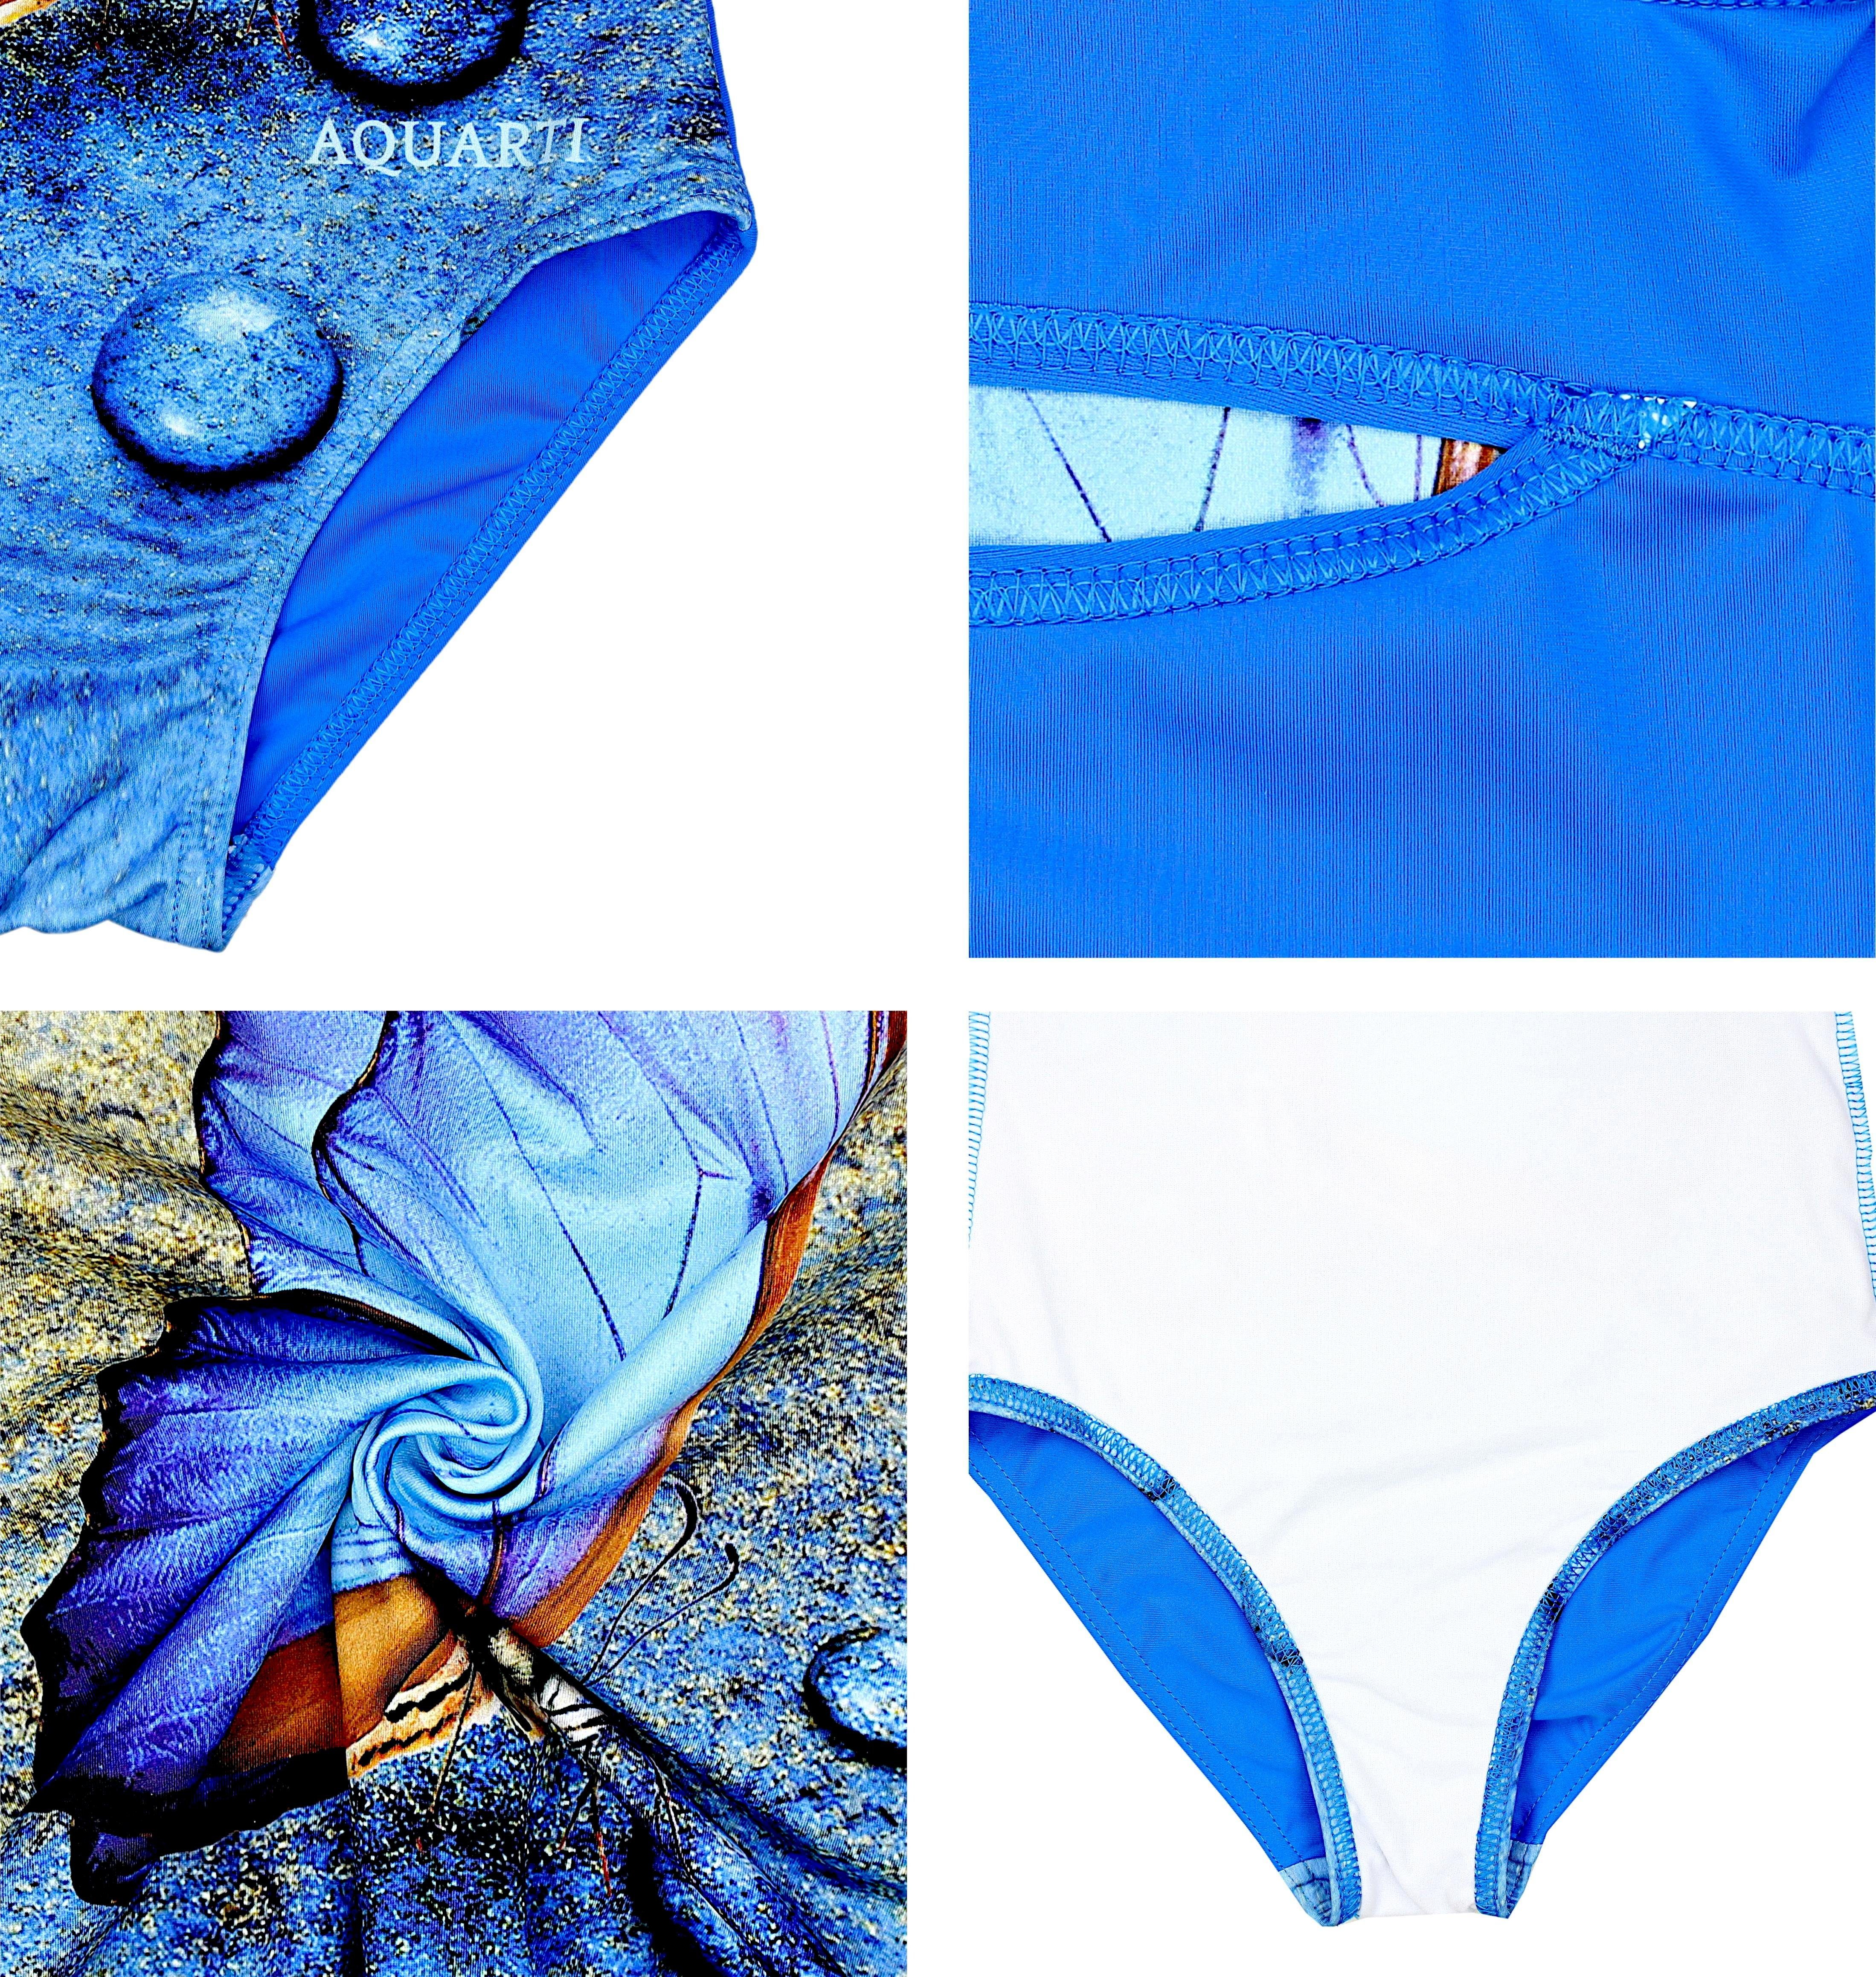 Aquarti Badeanzug / Badeanzug Aquarti Ringerrücken mit Schmetterling Print Mädchen Gelb Blau